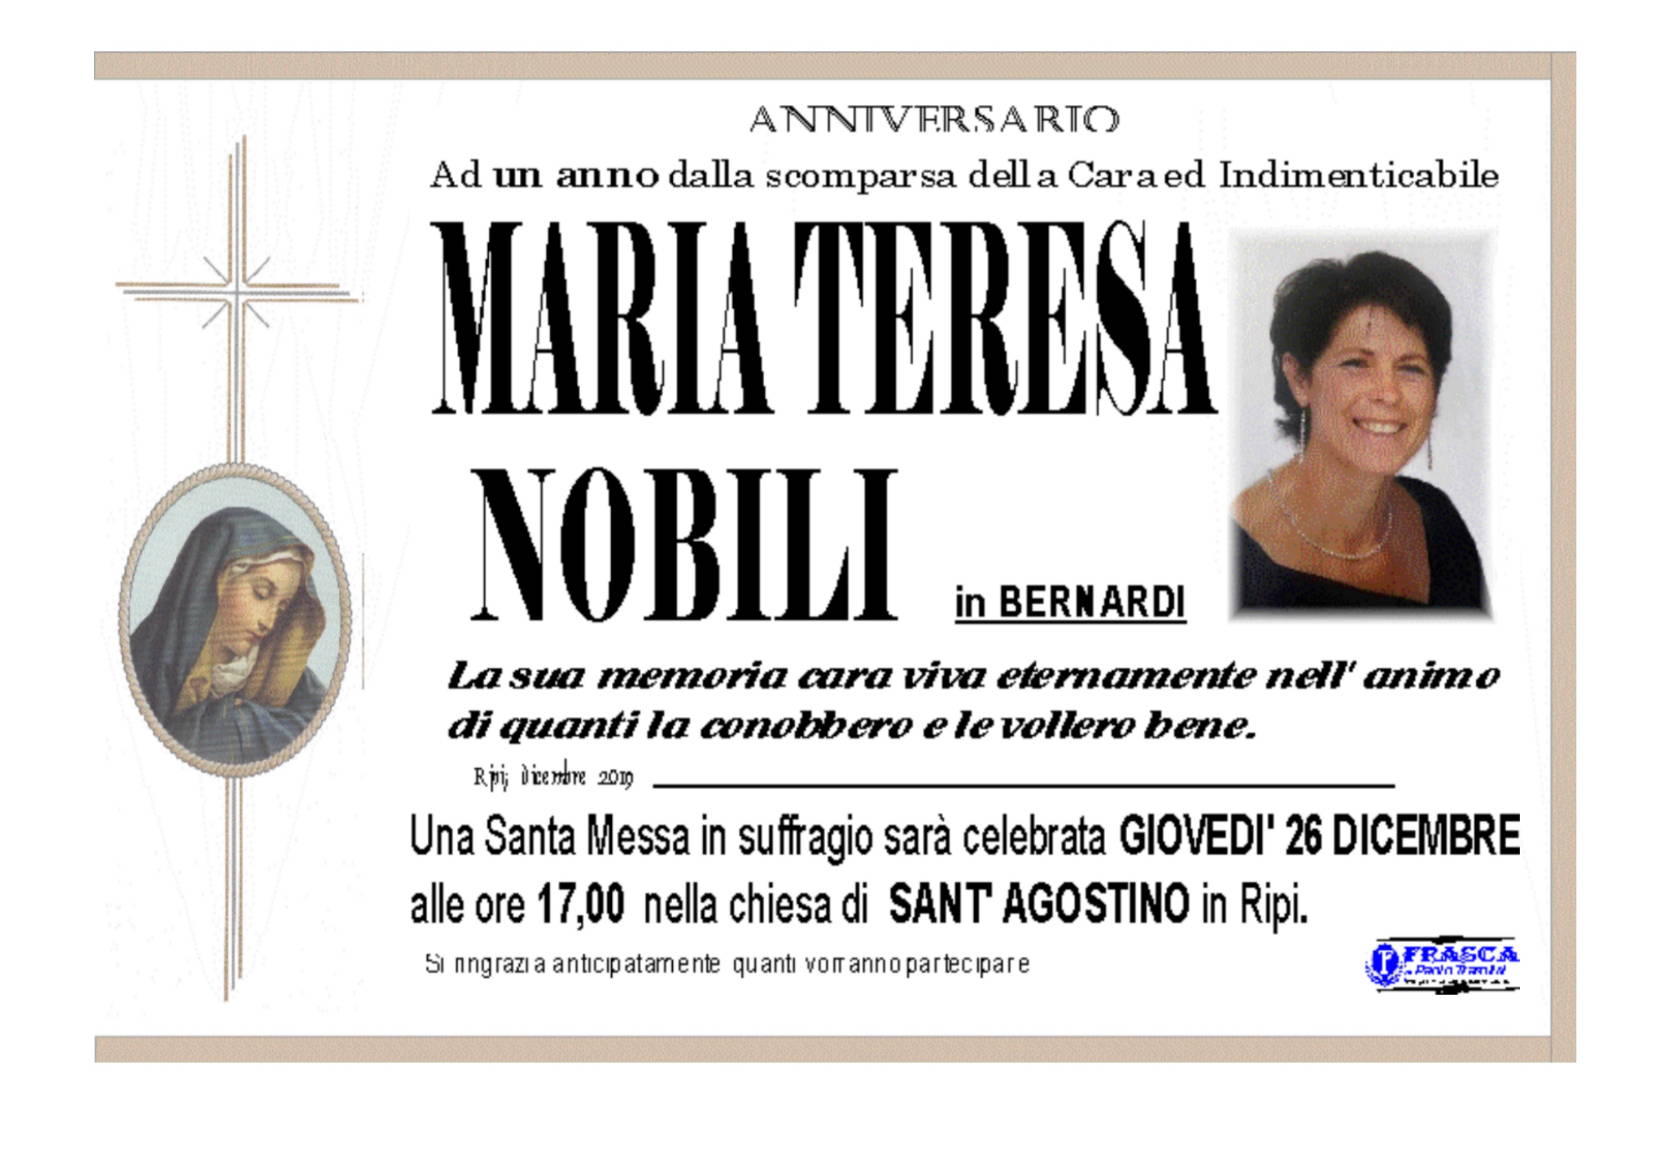 Maria Teresa Nobili